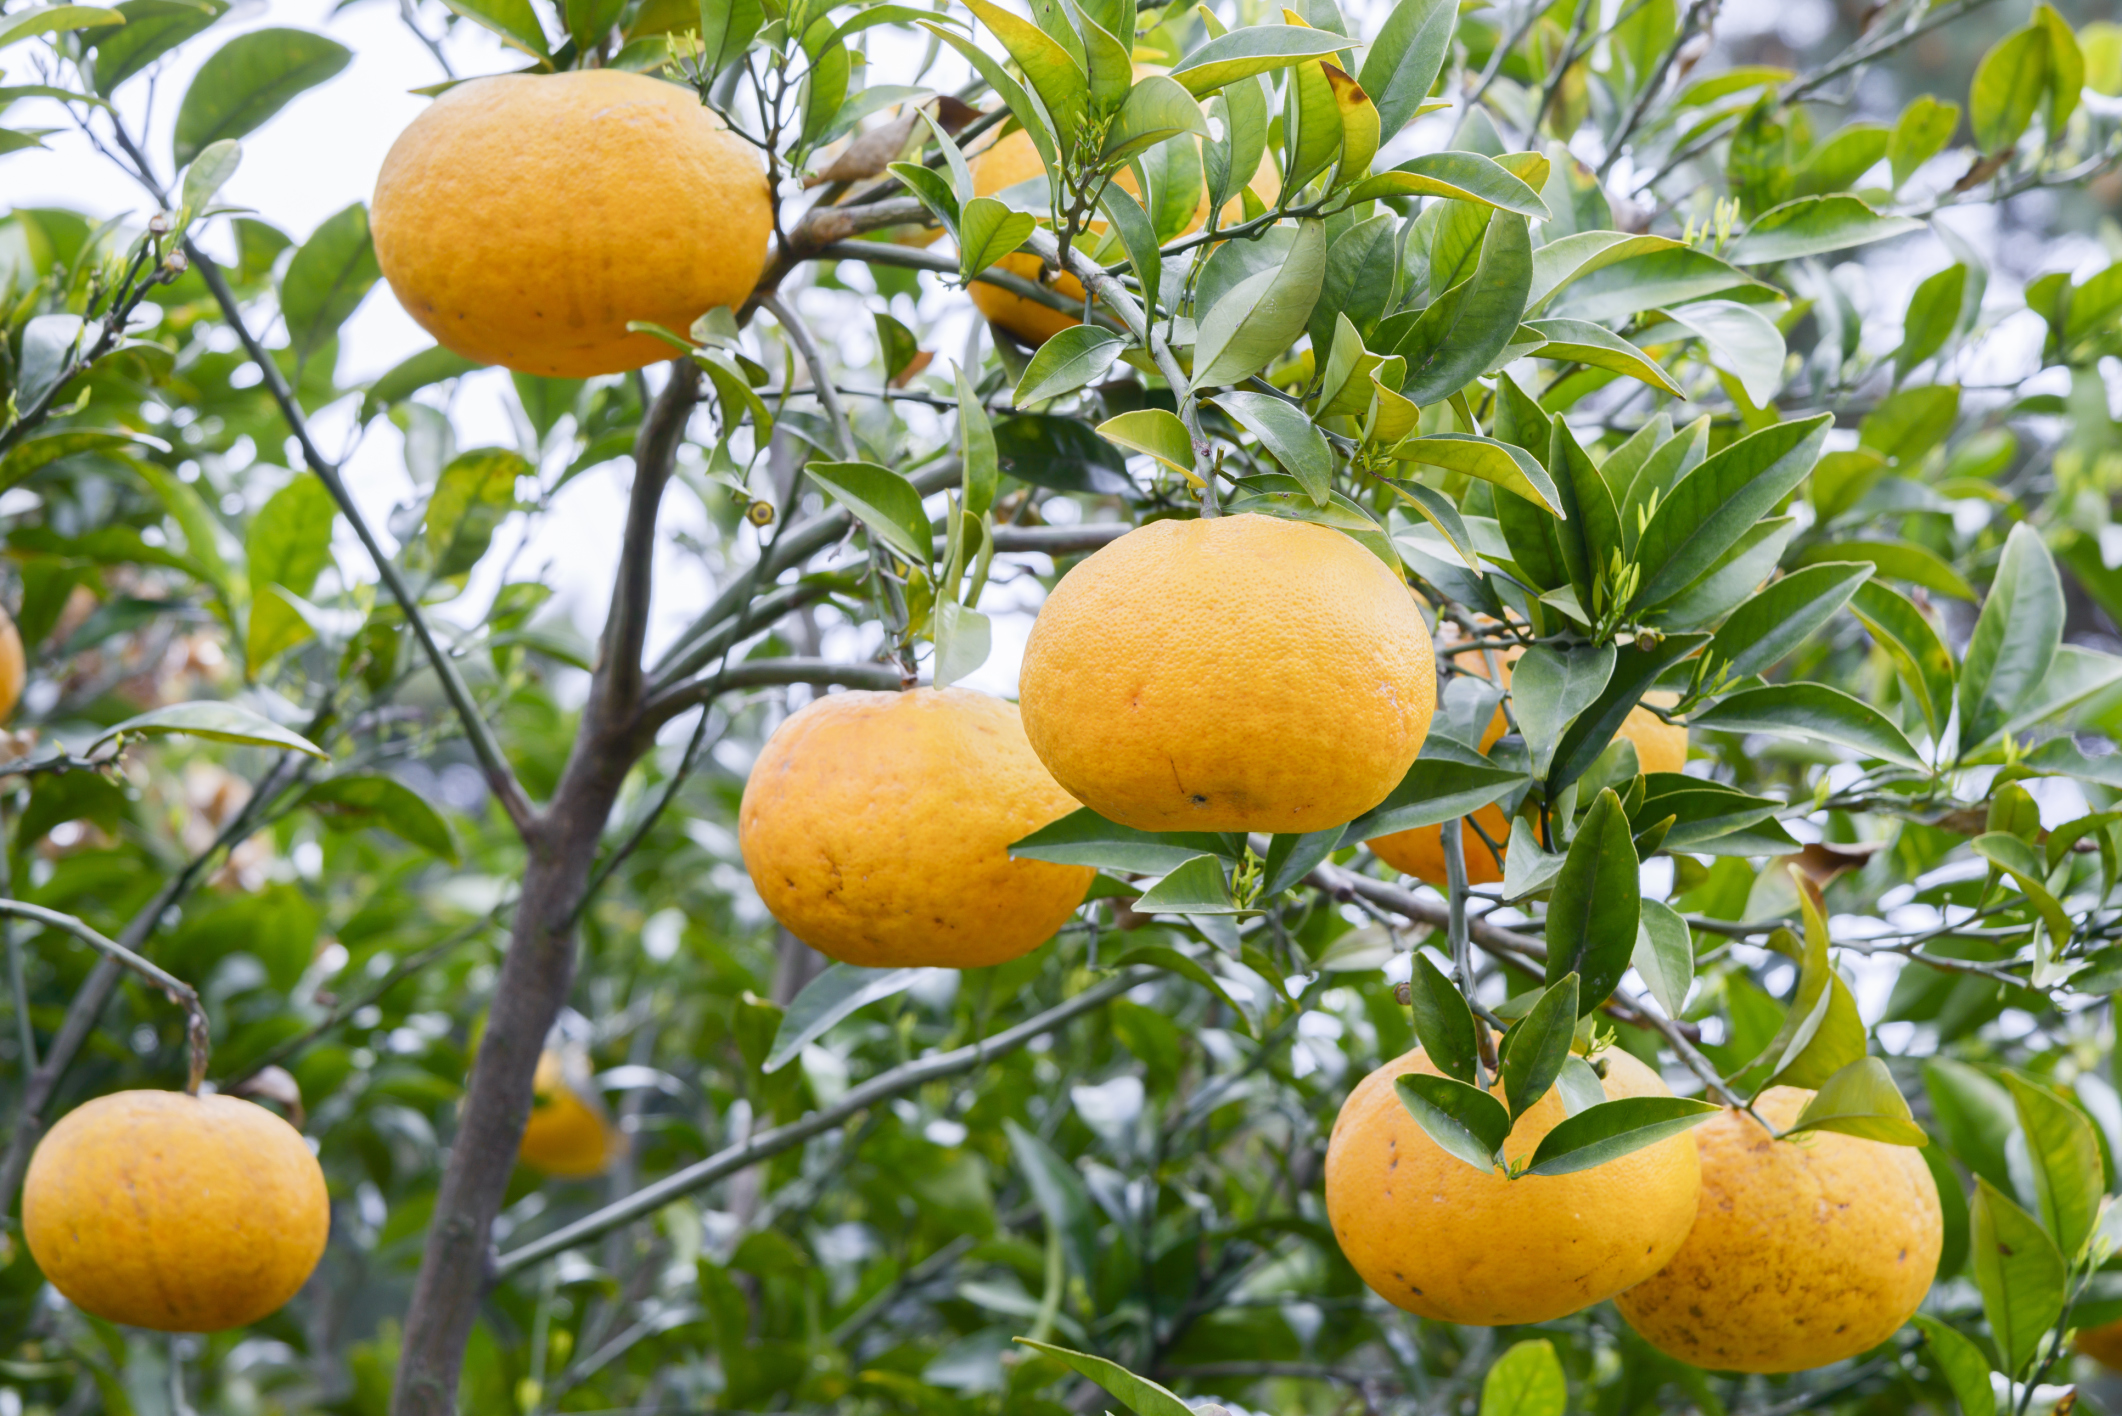 Nutritional Value of Tangerines vs. Oranges